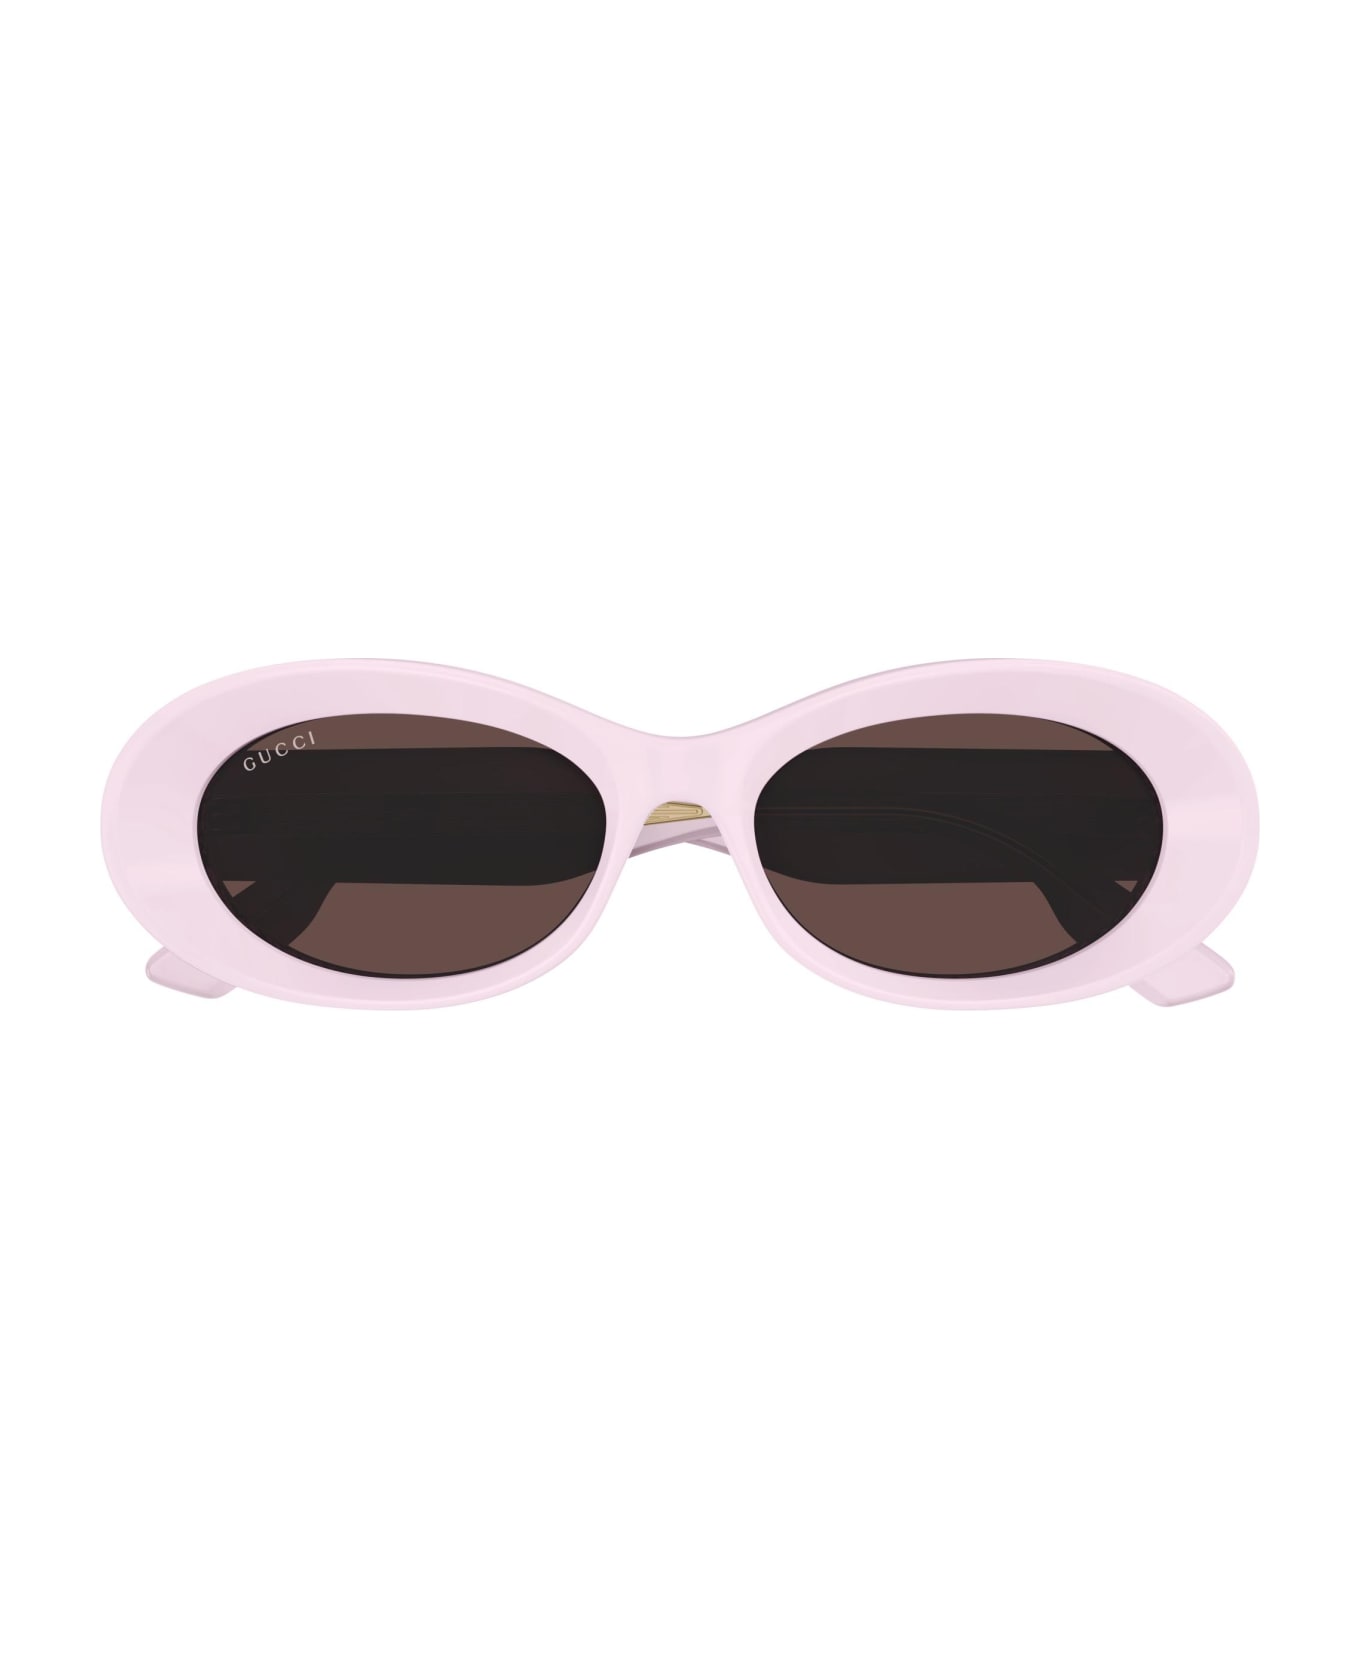 Gucci Eyewear Sunglasses - Rosa chiaro/Marrone